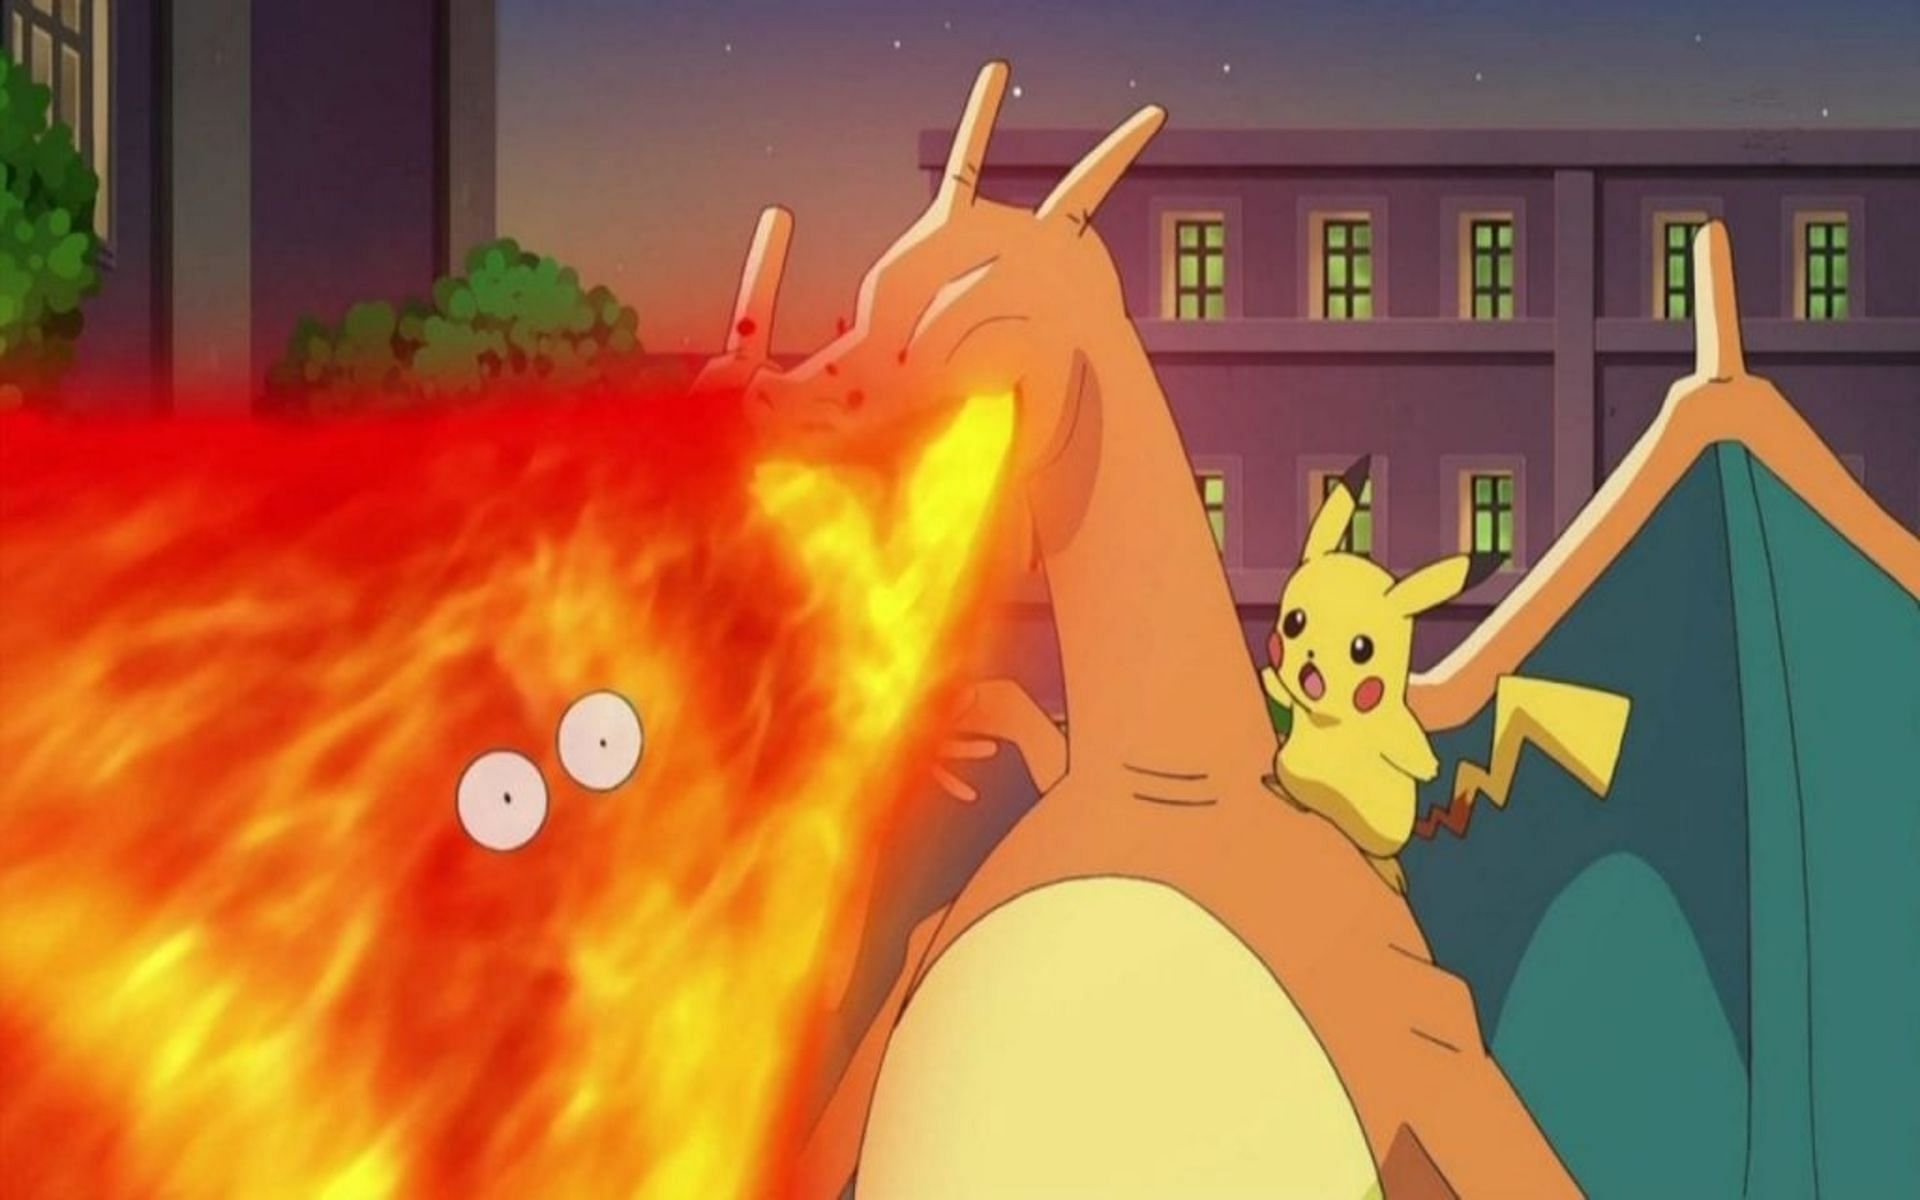 Ash uses Charizard even though it rarely listens (Image via The Pokemon Company)